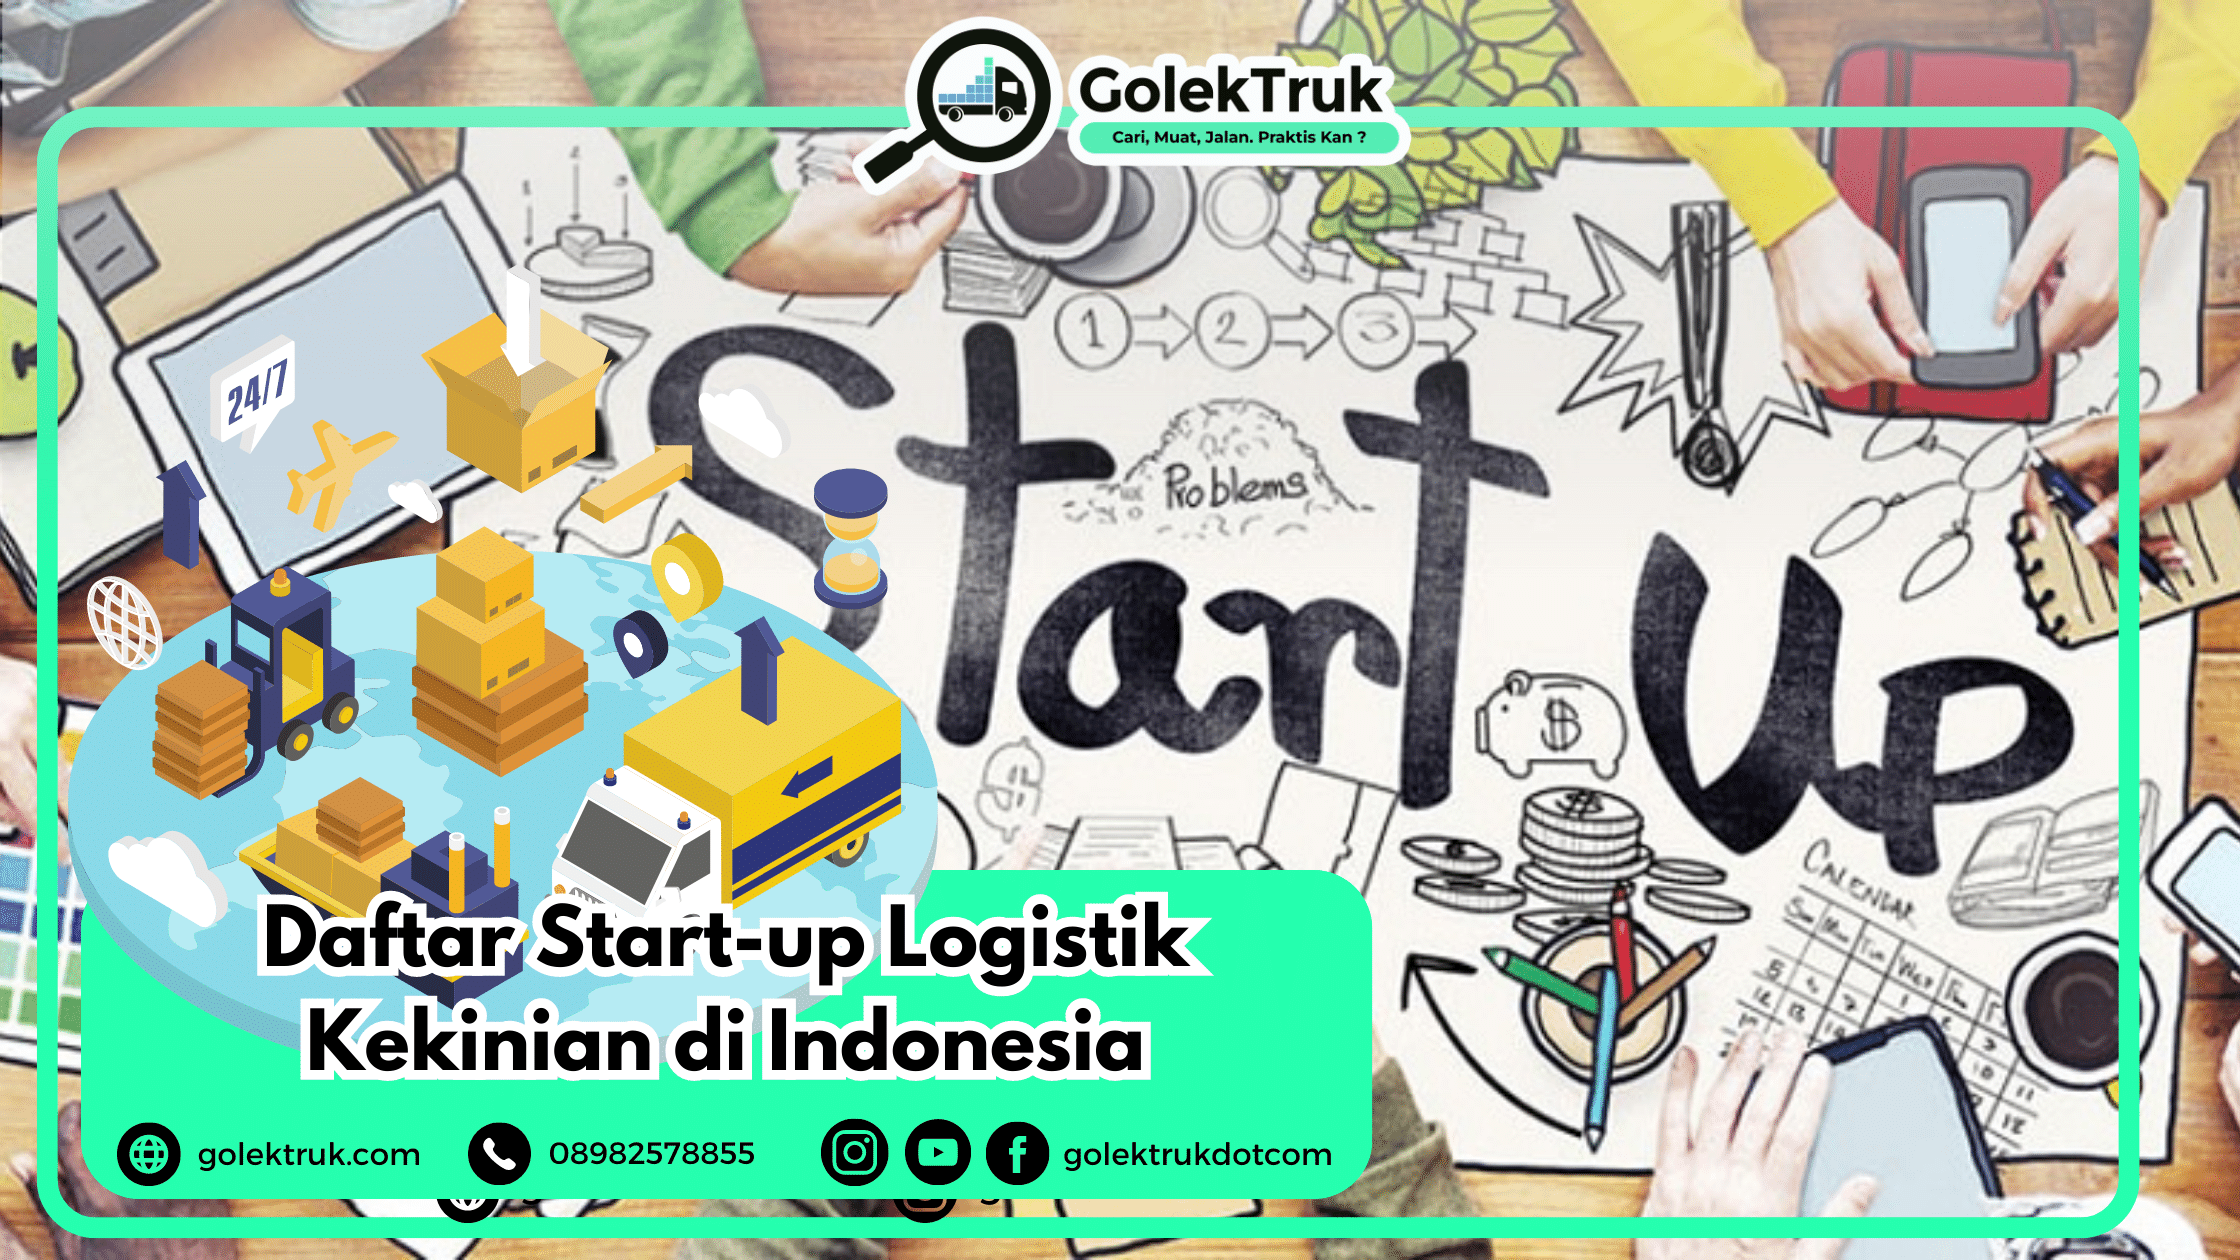 Daftar Start-up Logistik Kekinian di Indonesia